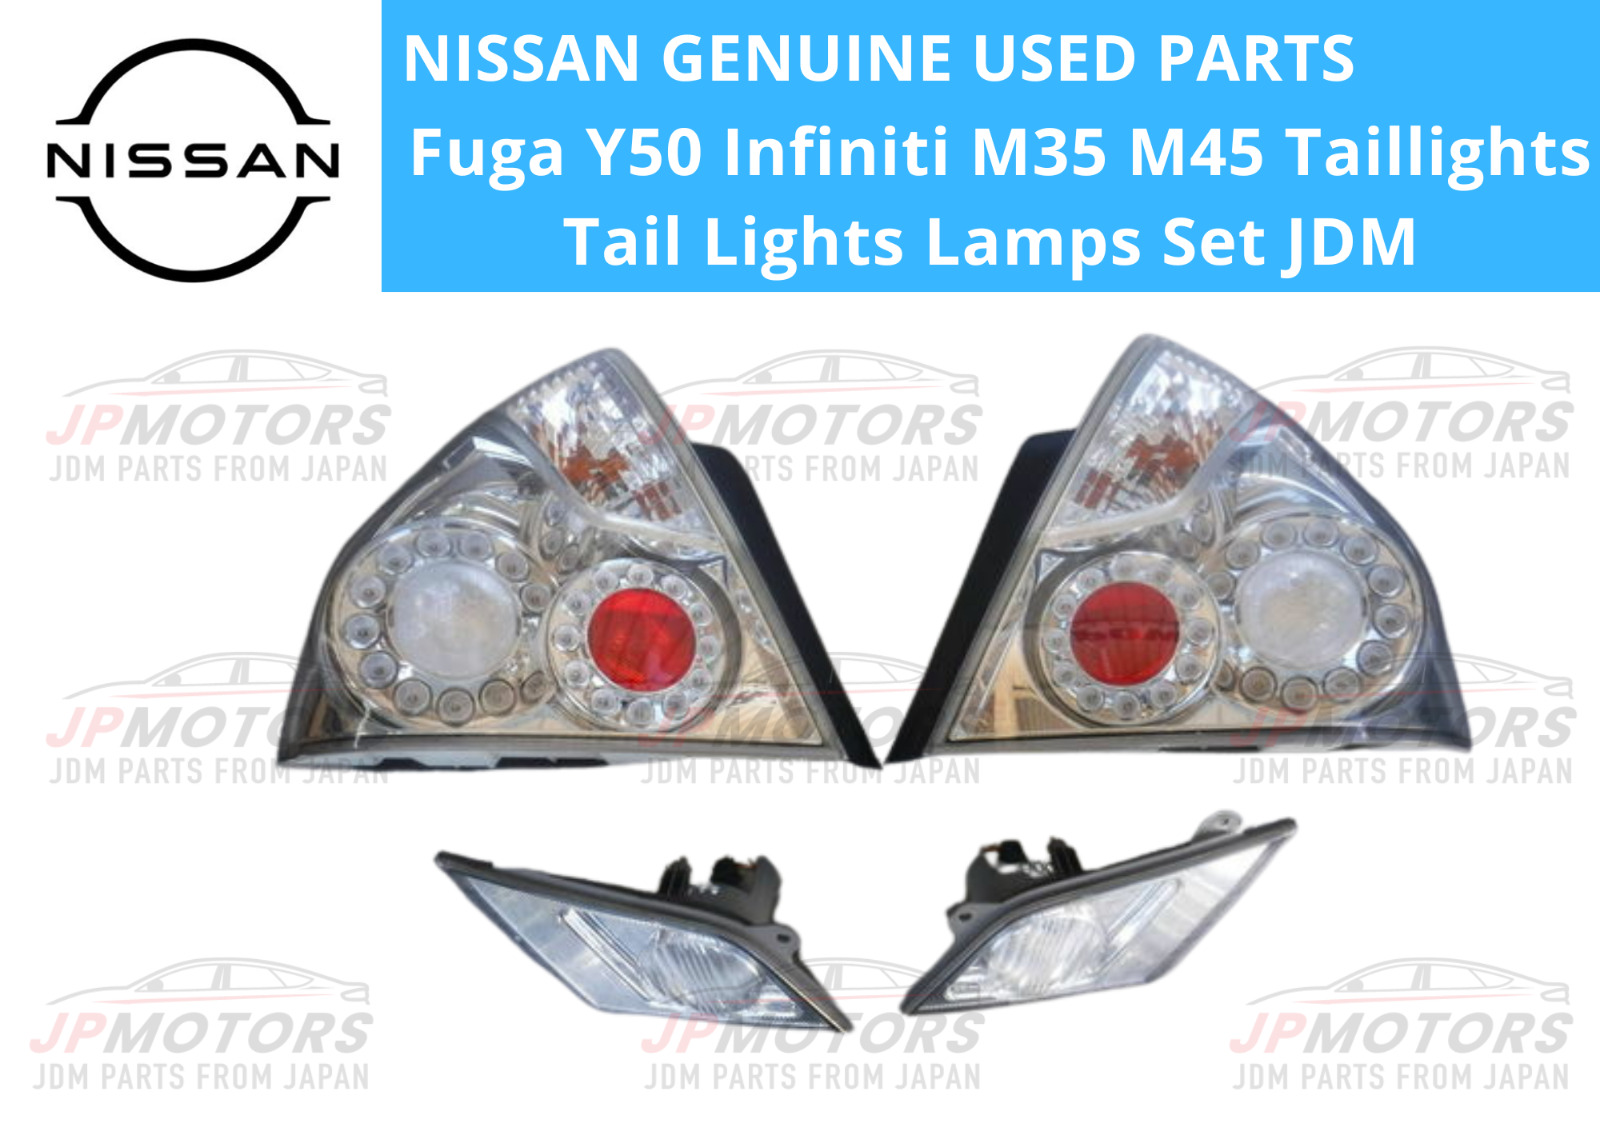 Nissan Genuine Fuga Y50 Infiniti M35 M45 Taillights Tail Lights Lamps Set JDM